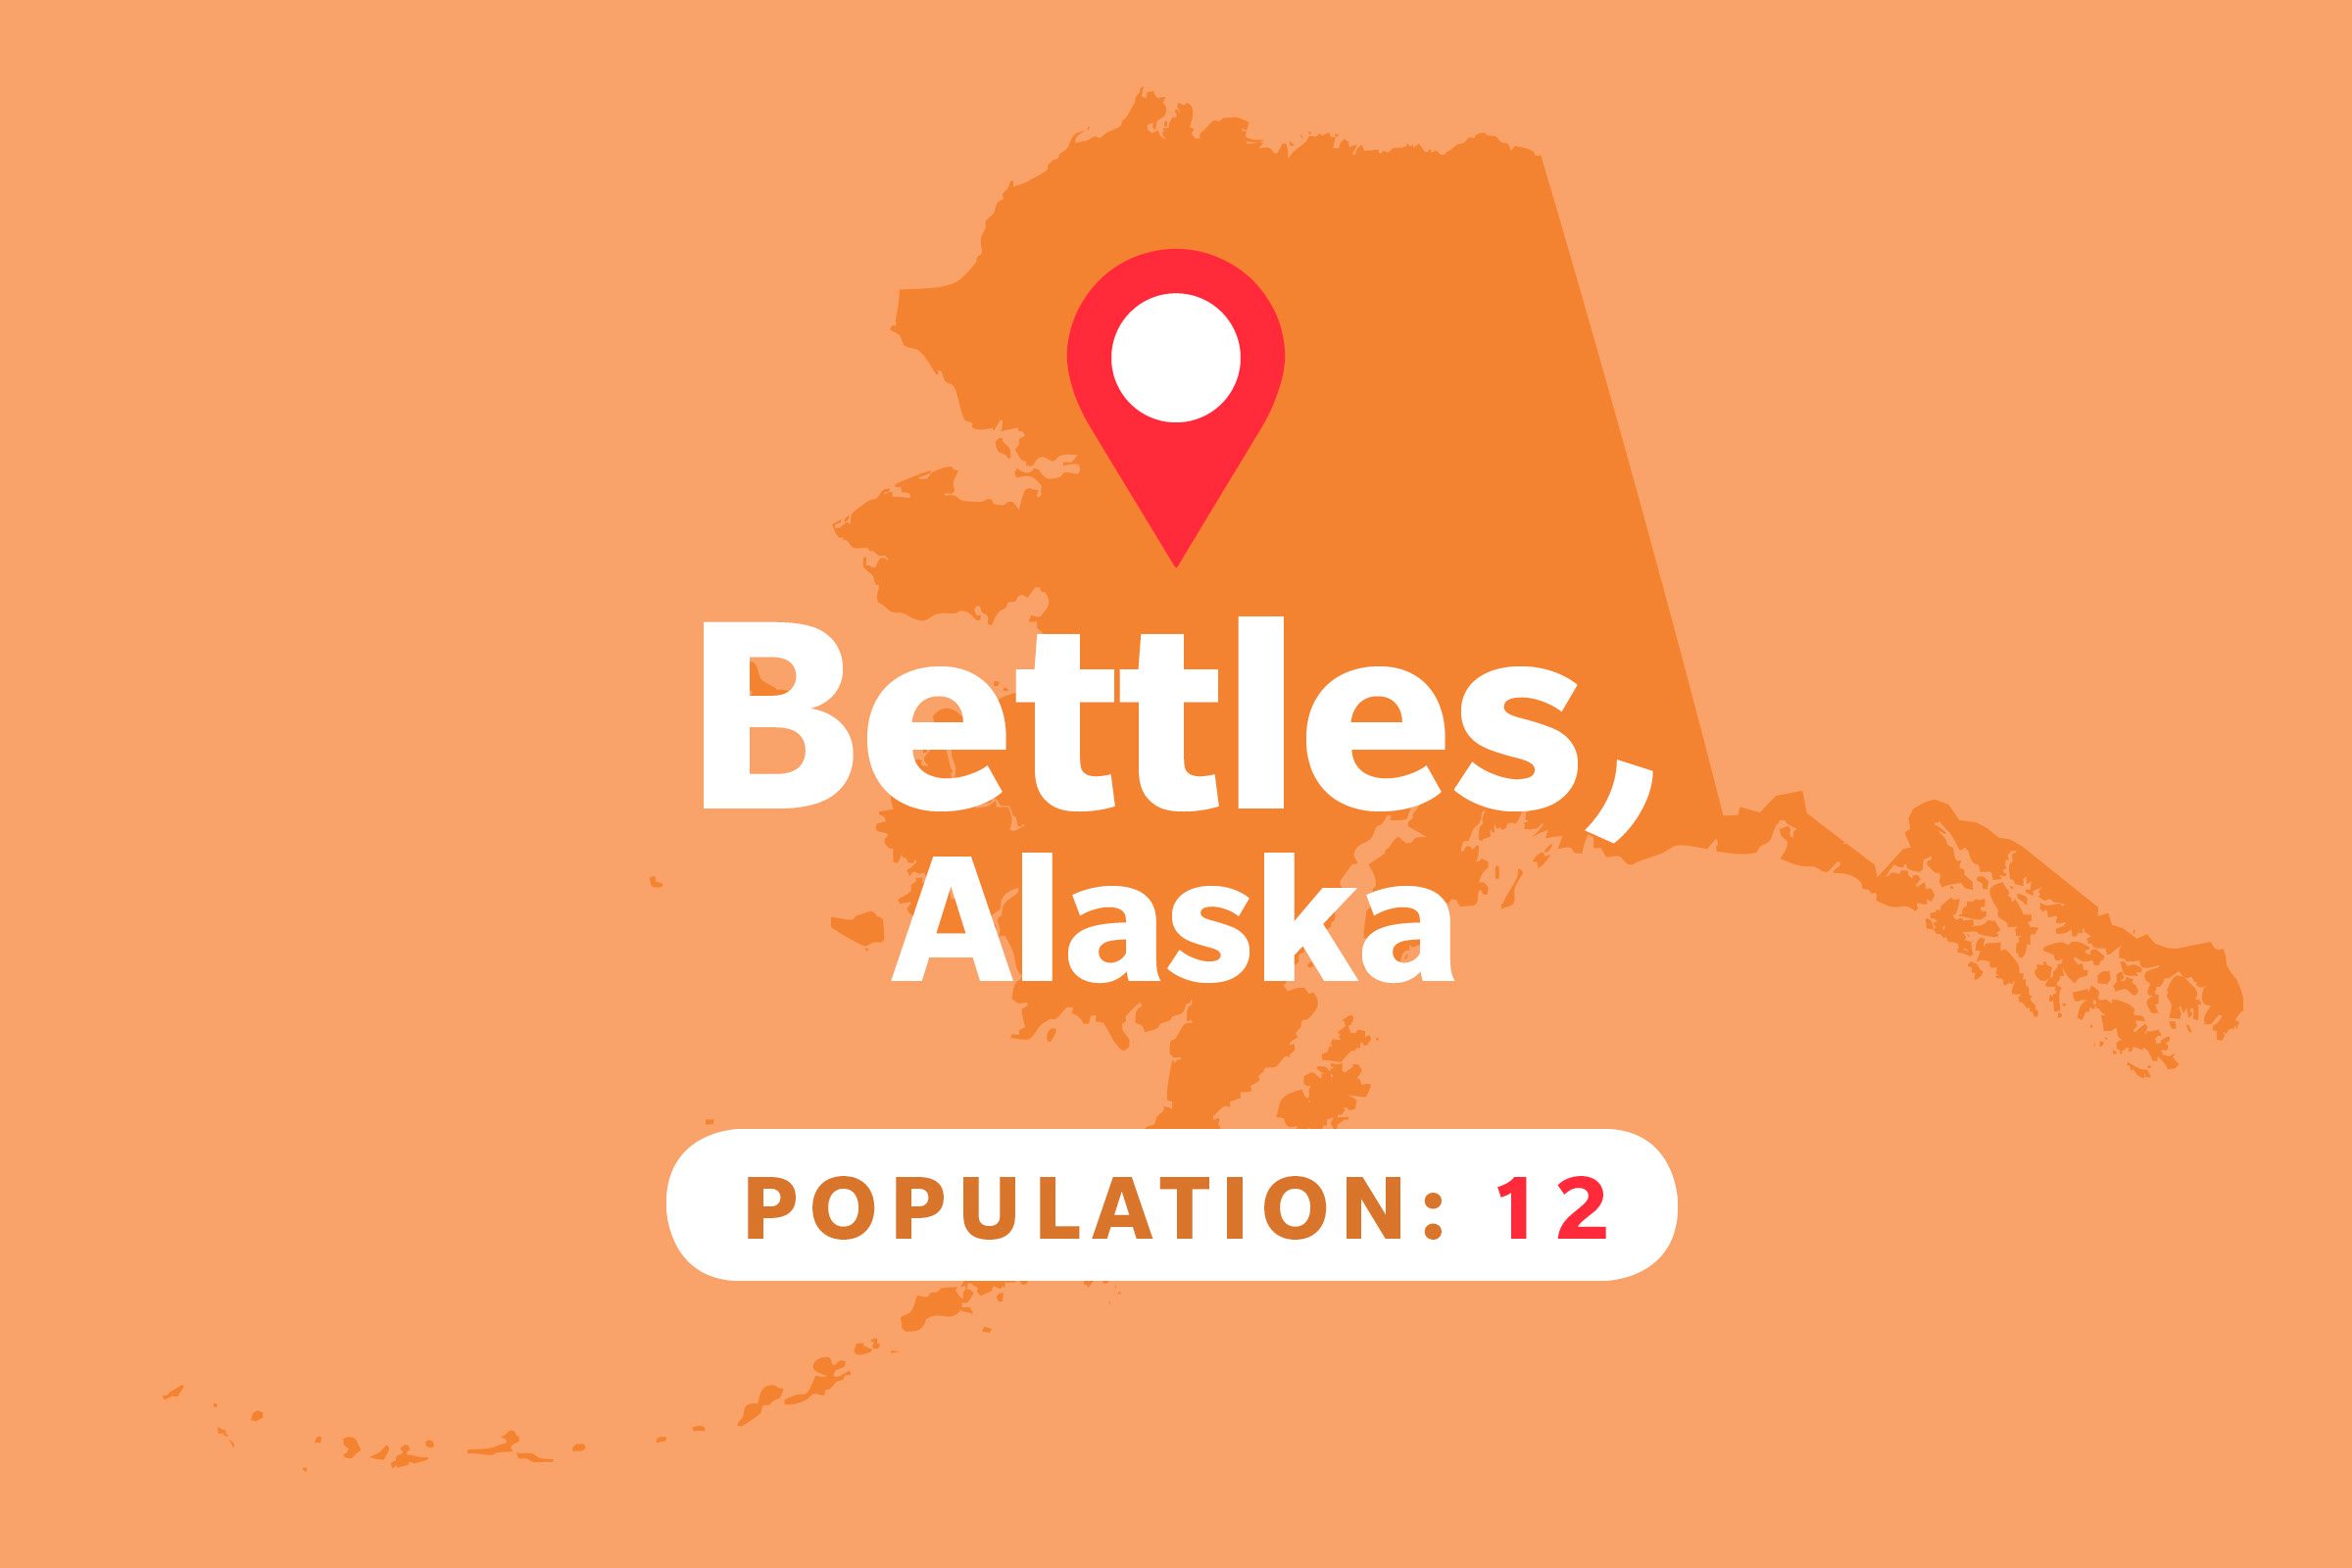 Bettles, Alaska